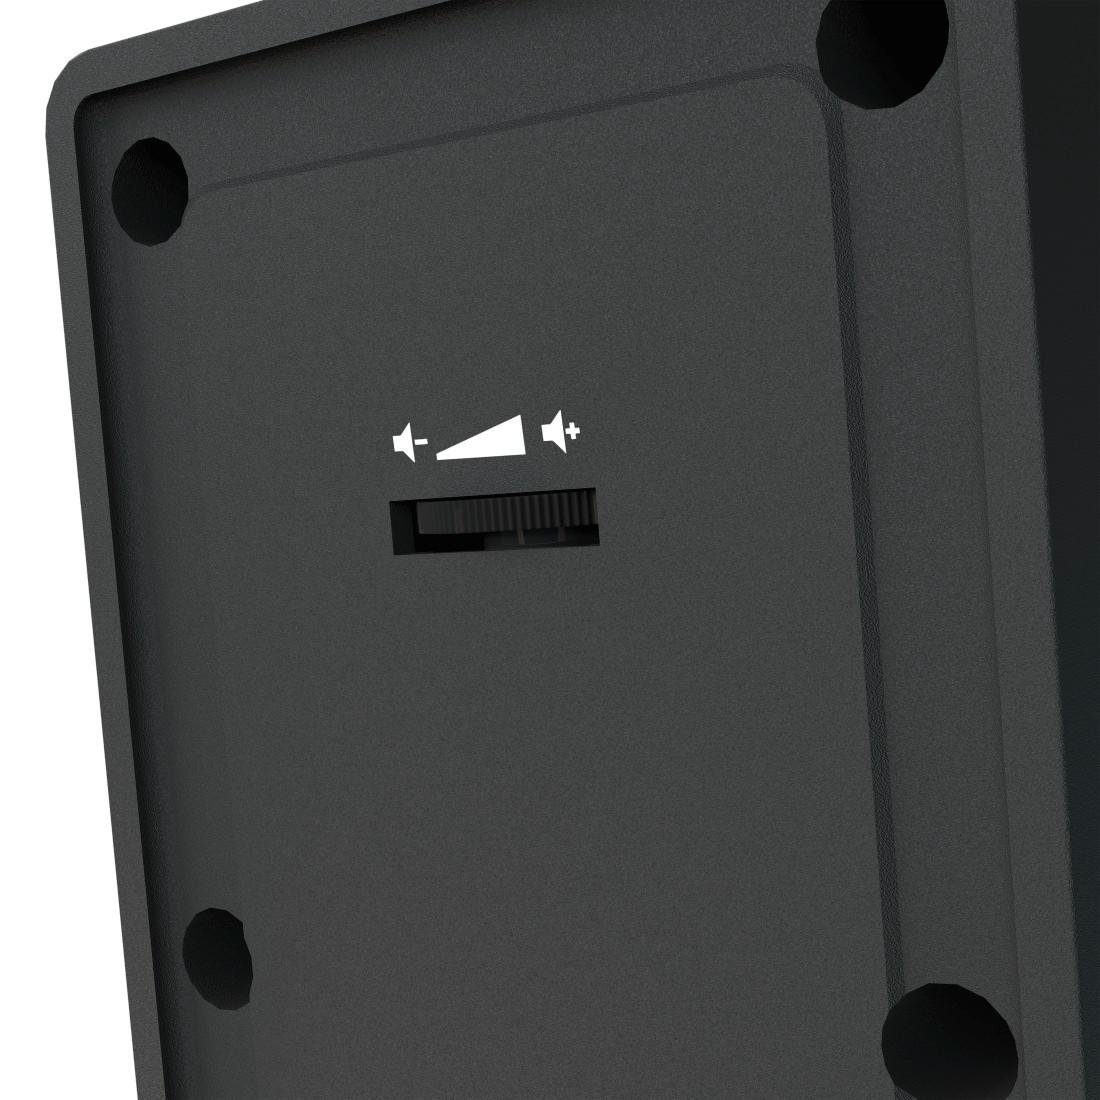 Hama PC-Lautsprecher Laptop Set LS-208", für "Sonic PC-Lautsprecher PC, Boxen